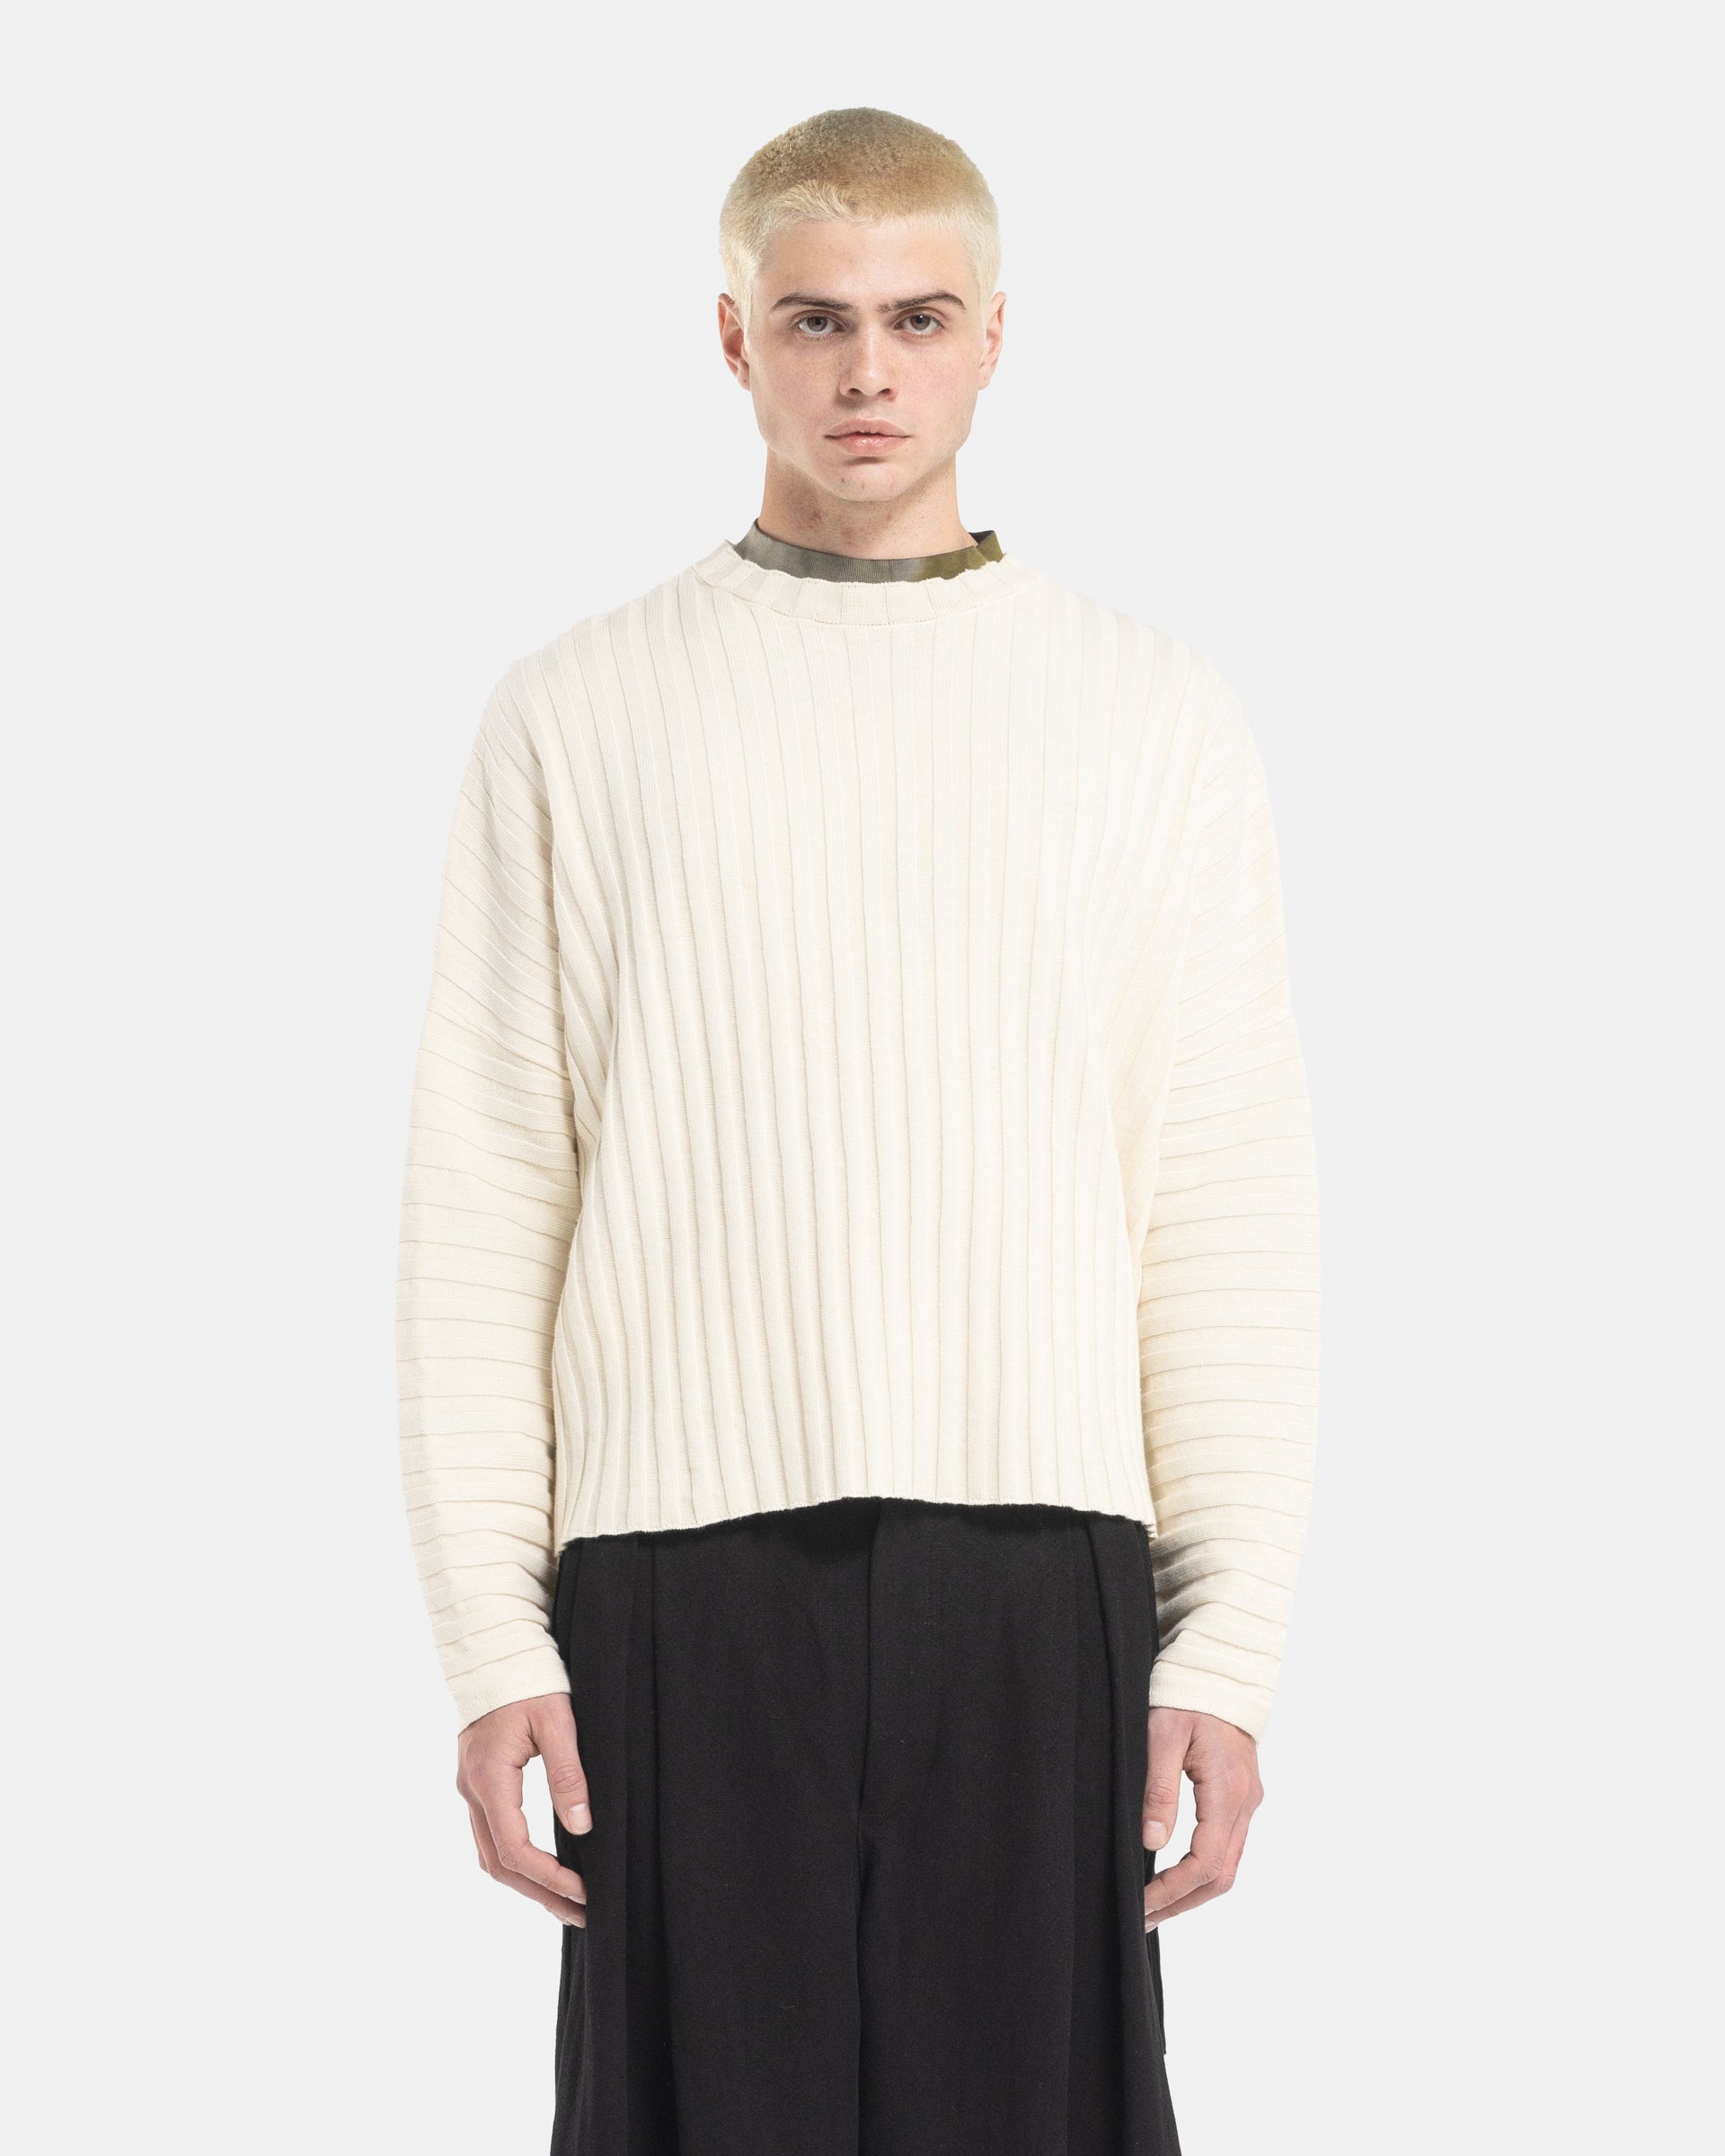 Male model wearing Eckhaus Latta Designer Wool Off-White Sweater with knit stripes